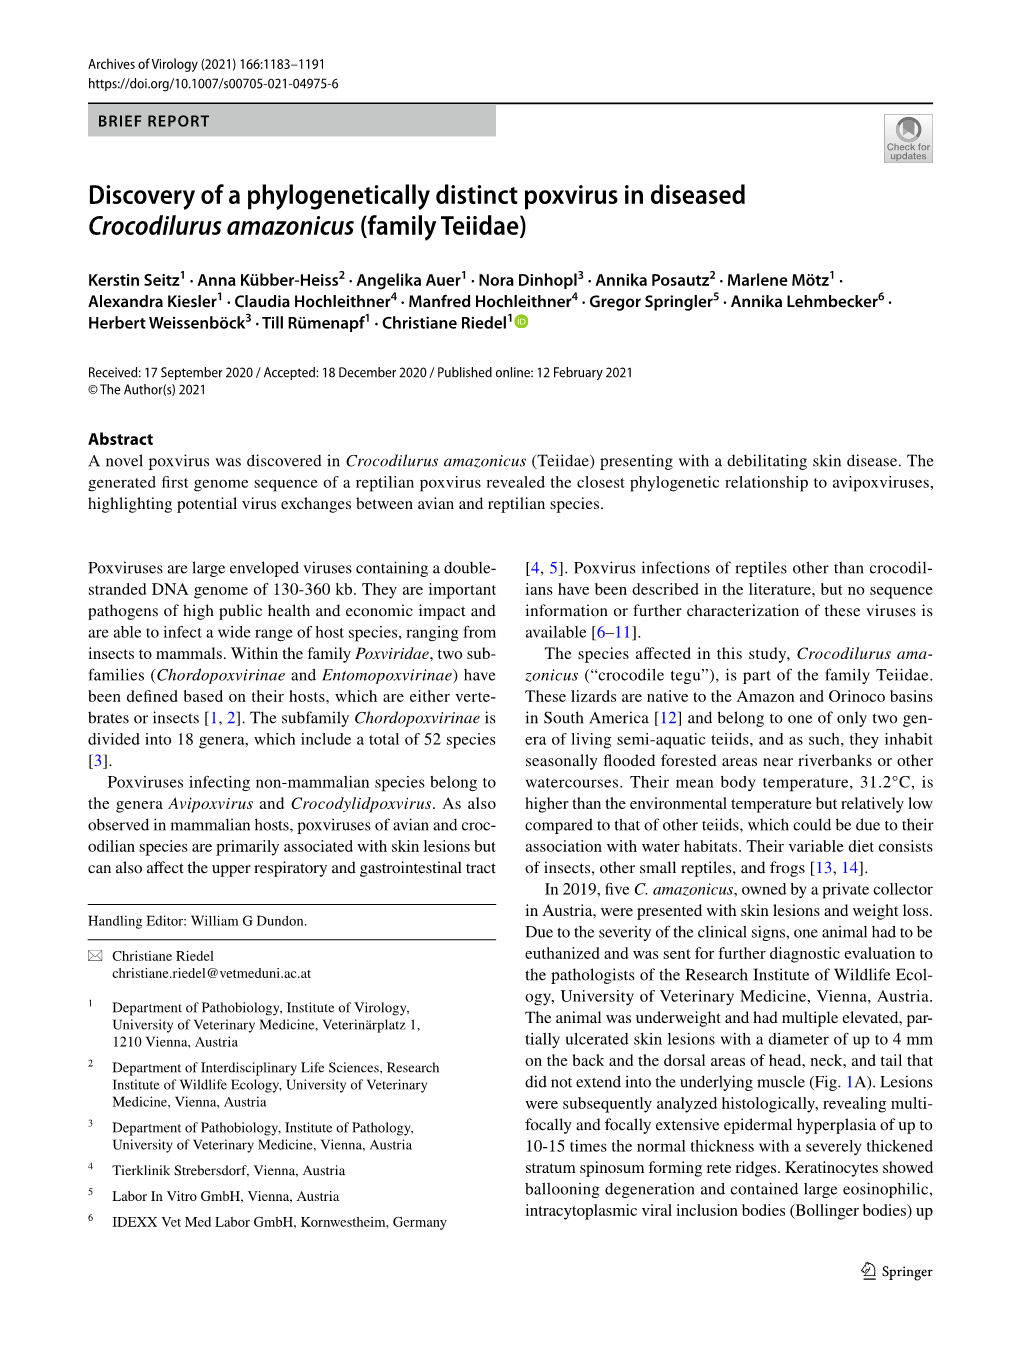 Discovery of a Phylogenetically Distinct Poxvirus in Diseased Crocodilurus Amazonicus (Family Teiidae)